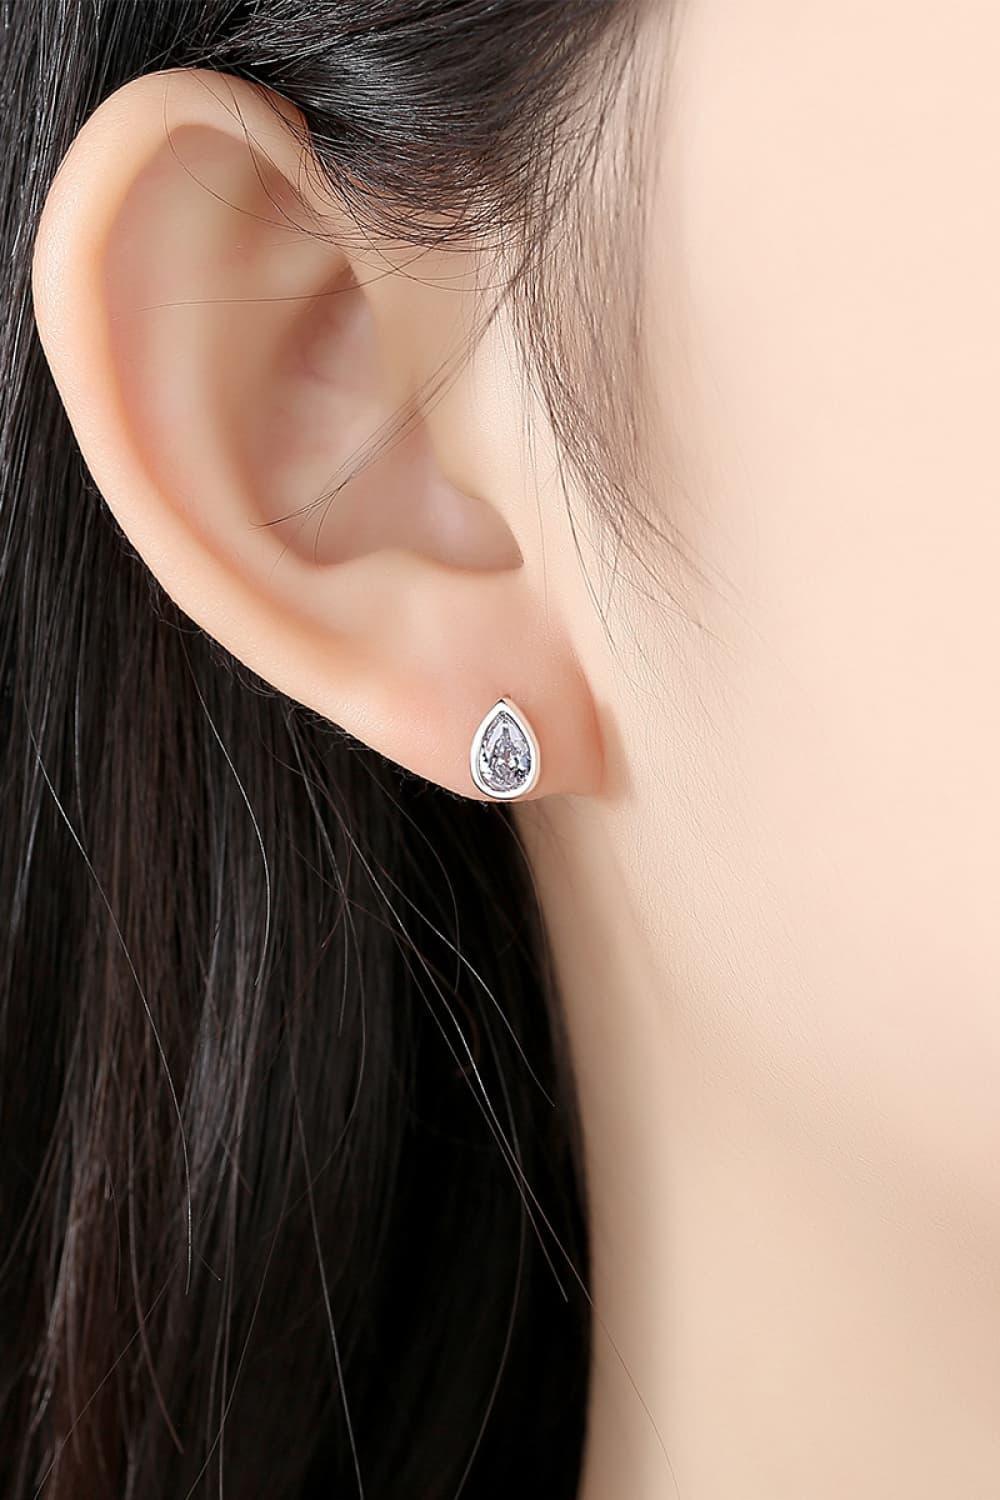 Surprising Zircon Teardrop Sterling Silver Stud Earrings - MXSTUDIO.COM